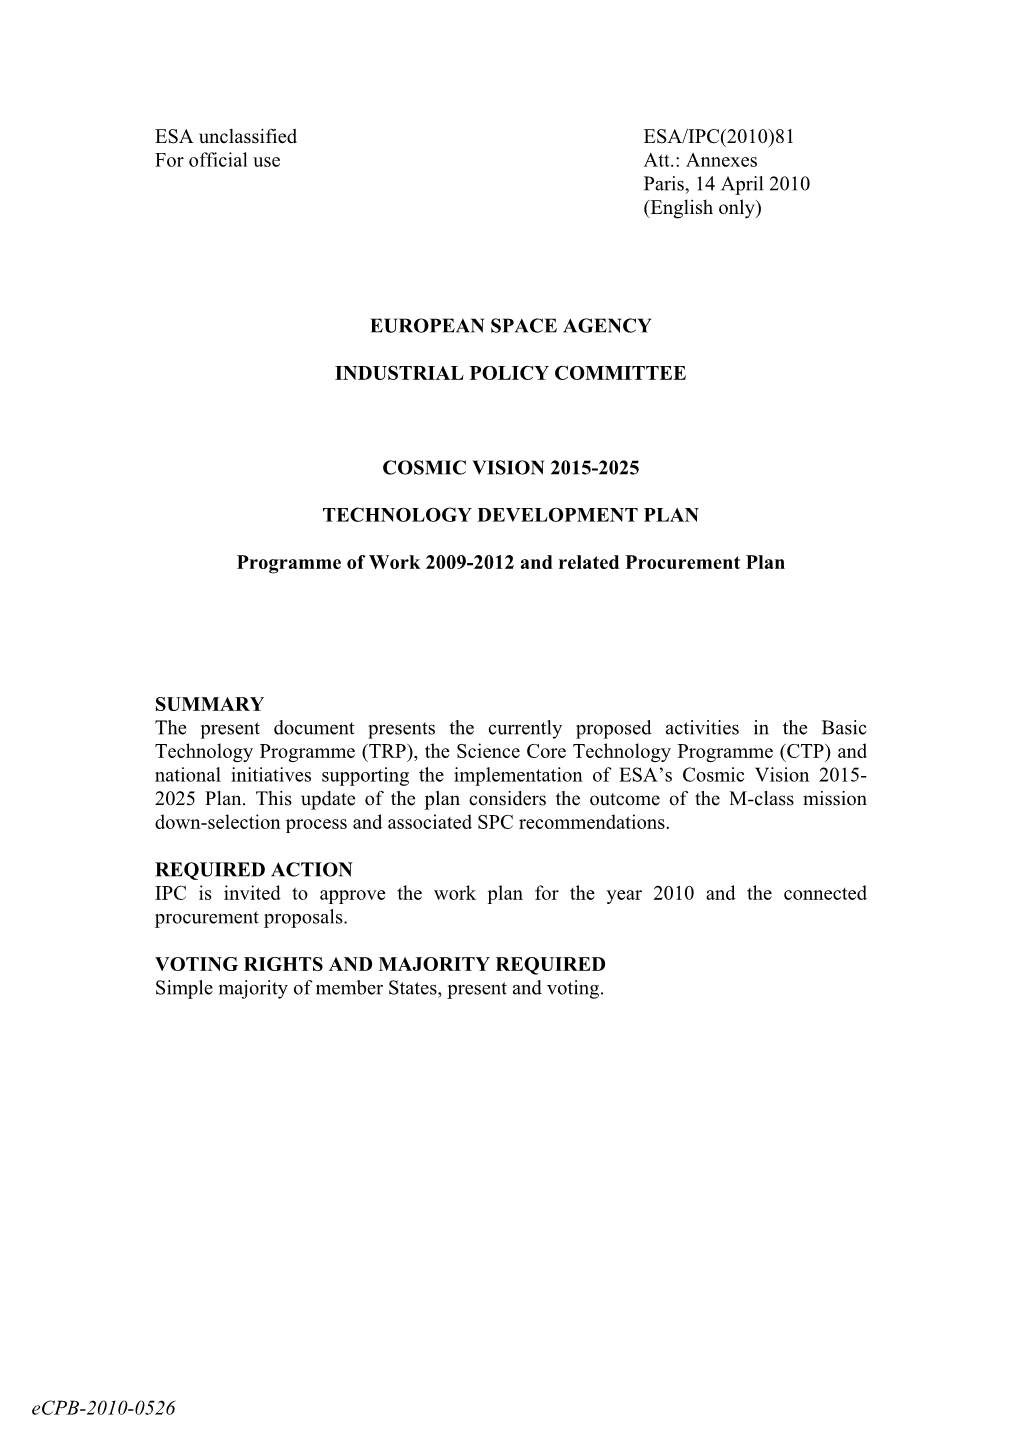 ESA Unclassified ESA/IPC(2010)81 for Official Use Att.: Annexes Paris, 14 April 2010 (English Only)